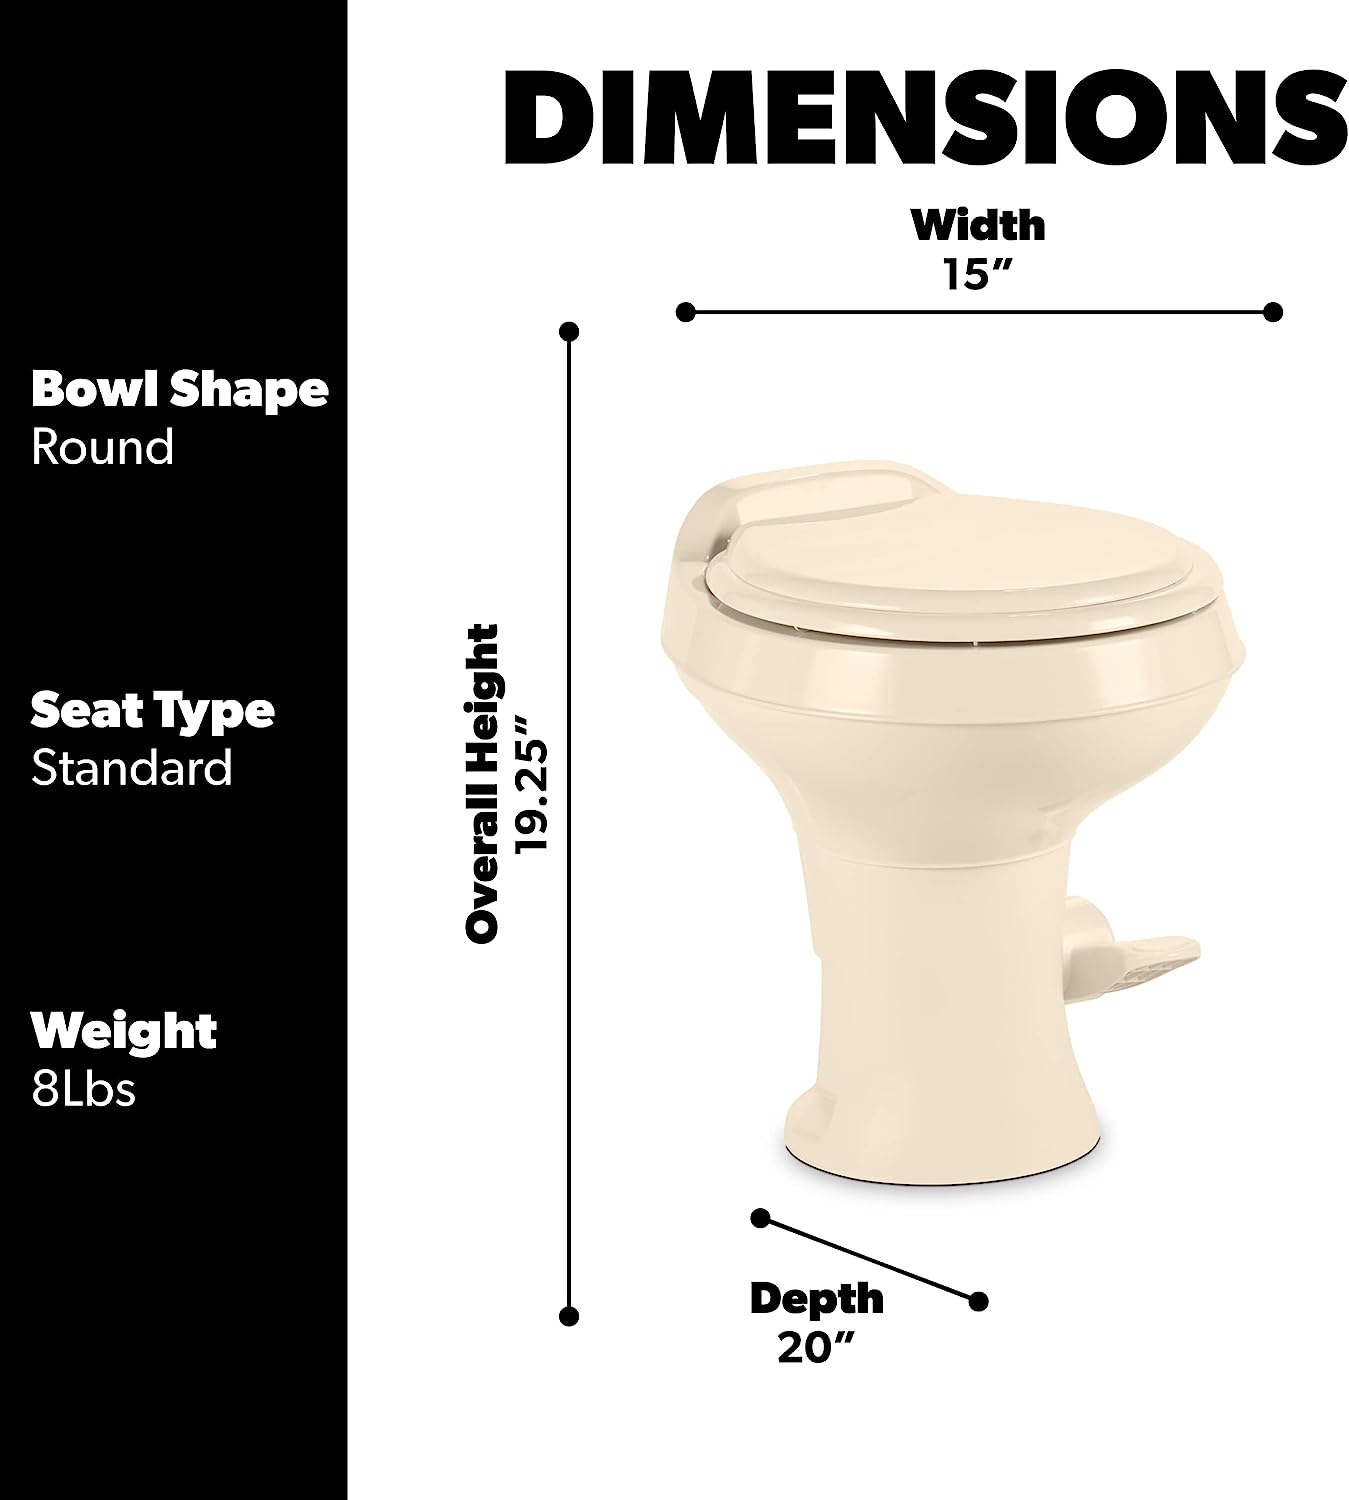 Dometic 300 Series Gravity Flush Toilet- Bone, 302300073